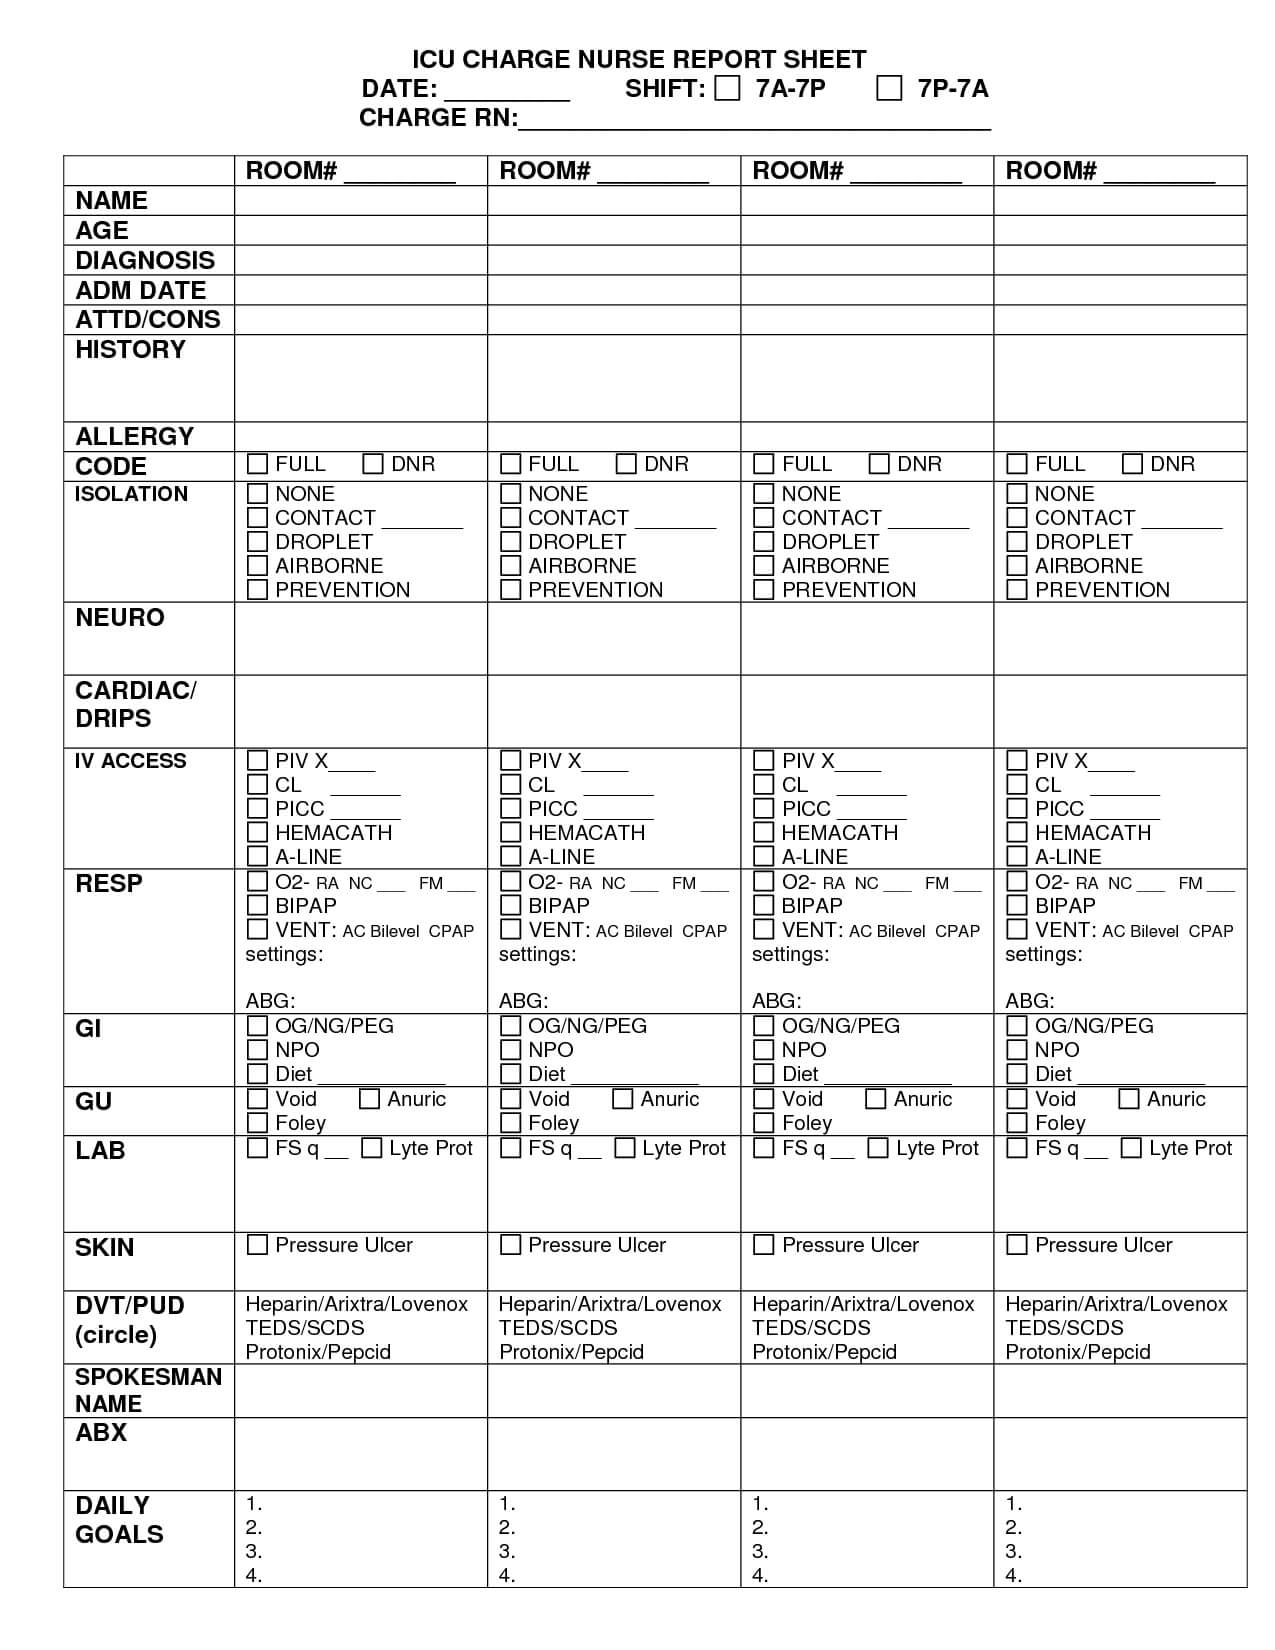 Charge Nurse Report Sheet Sample | Nursing Documents | Nurse Throughout Nurse Shift Report Sheet Template